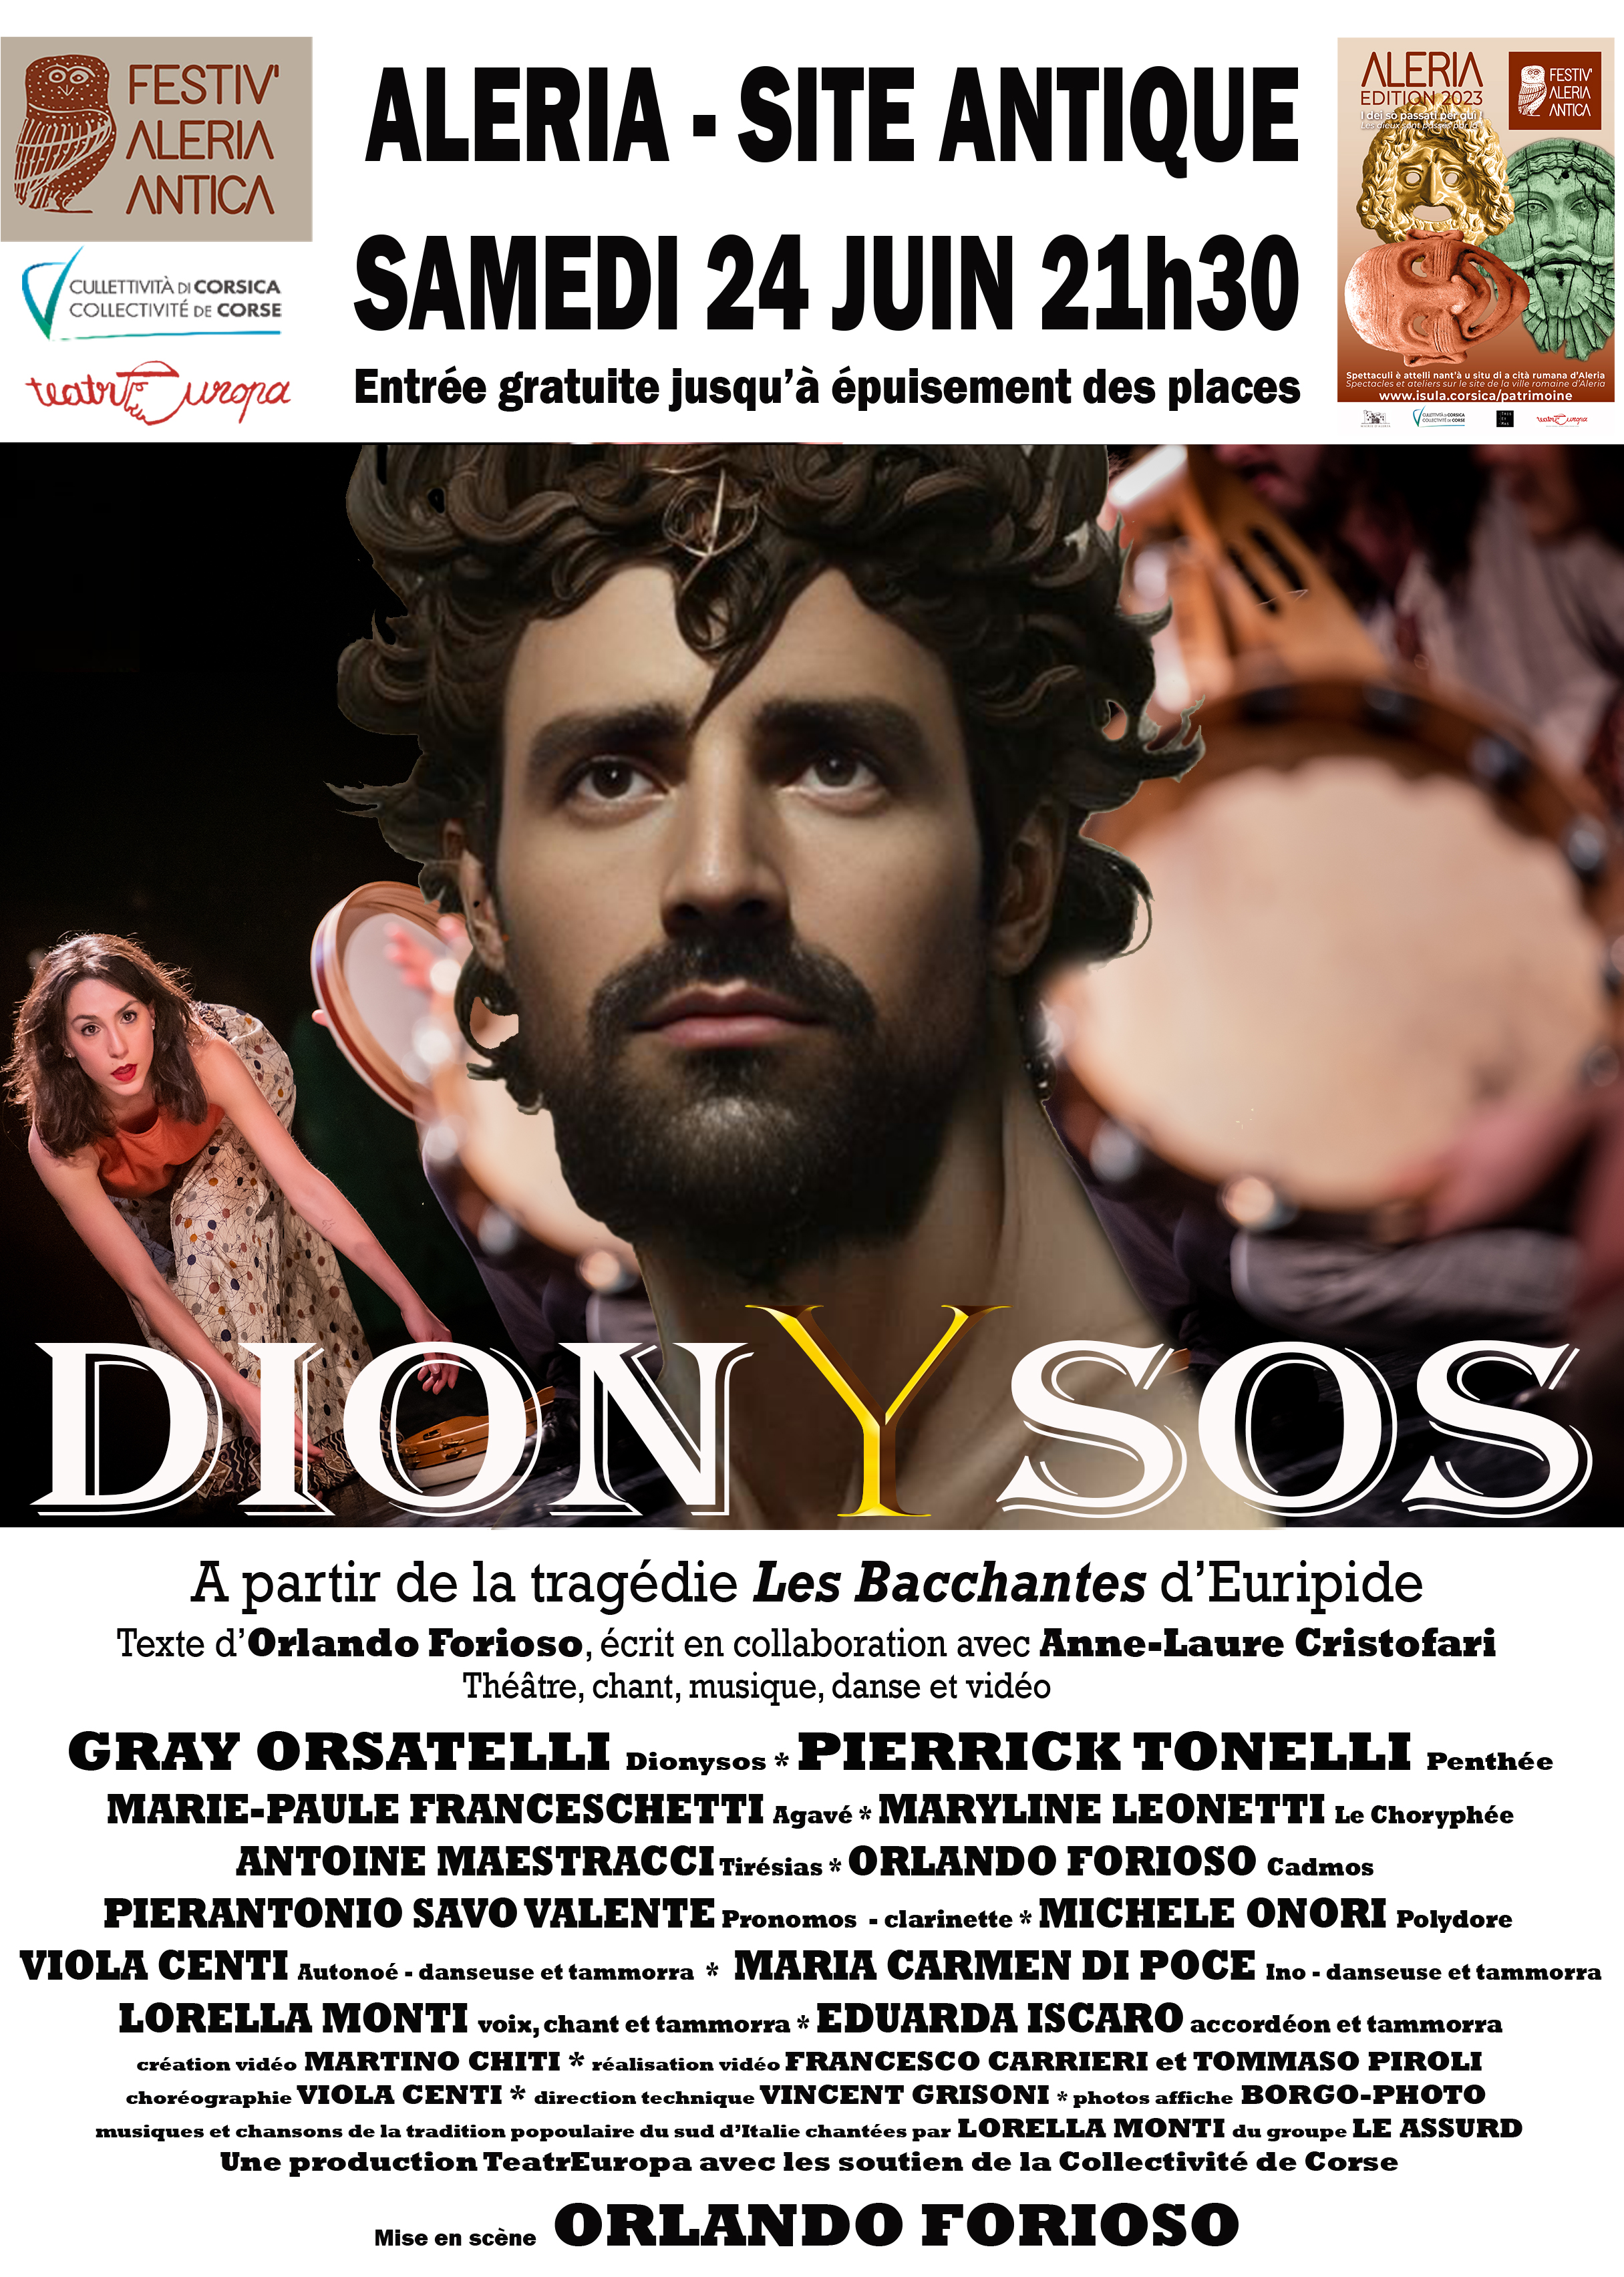 Festiv'Aleria Antica : représentation du spectacle grand public "Dionysos" samedi 24 juin 2023